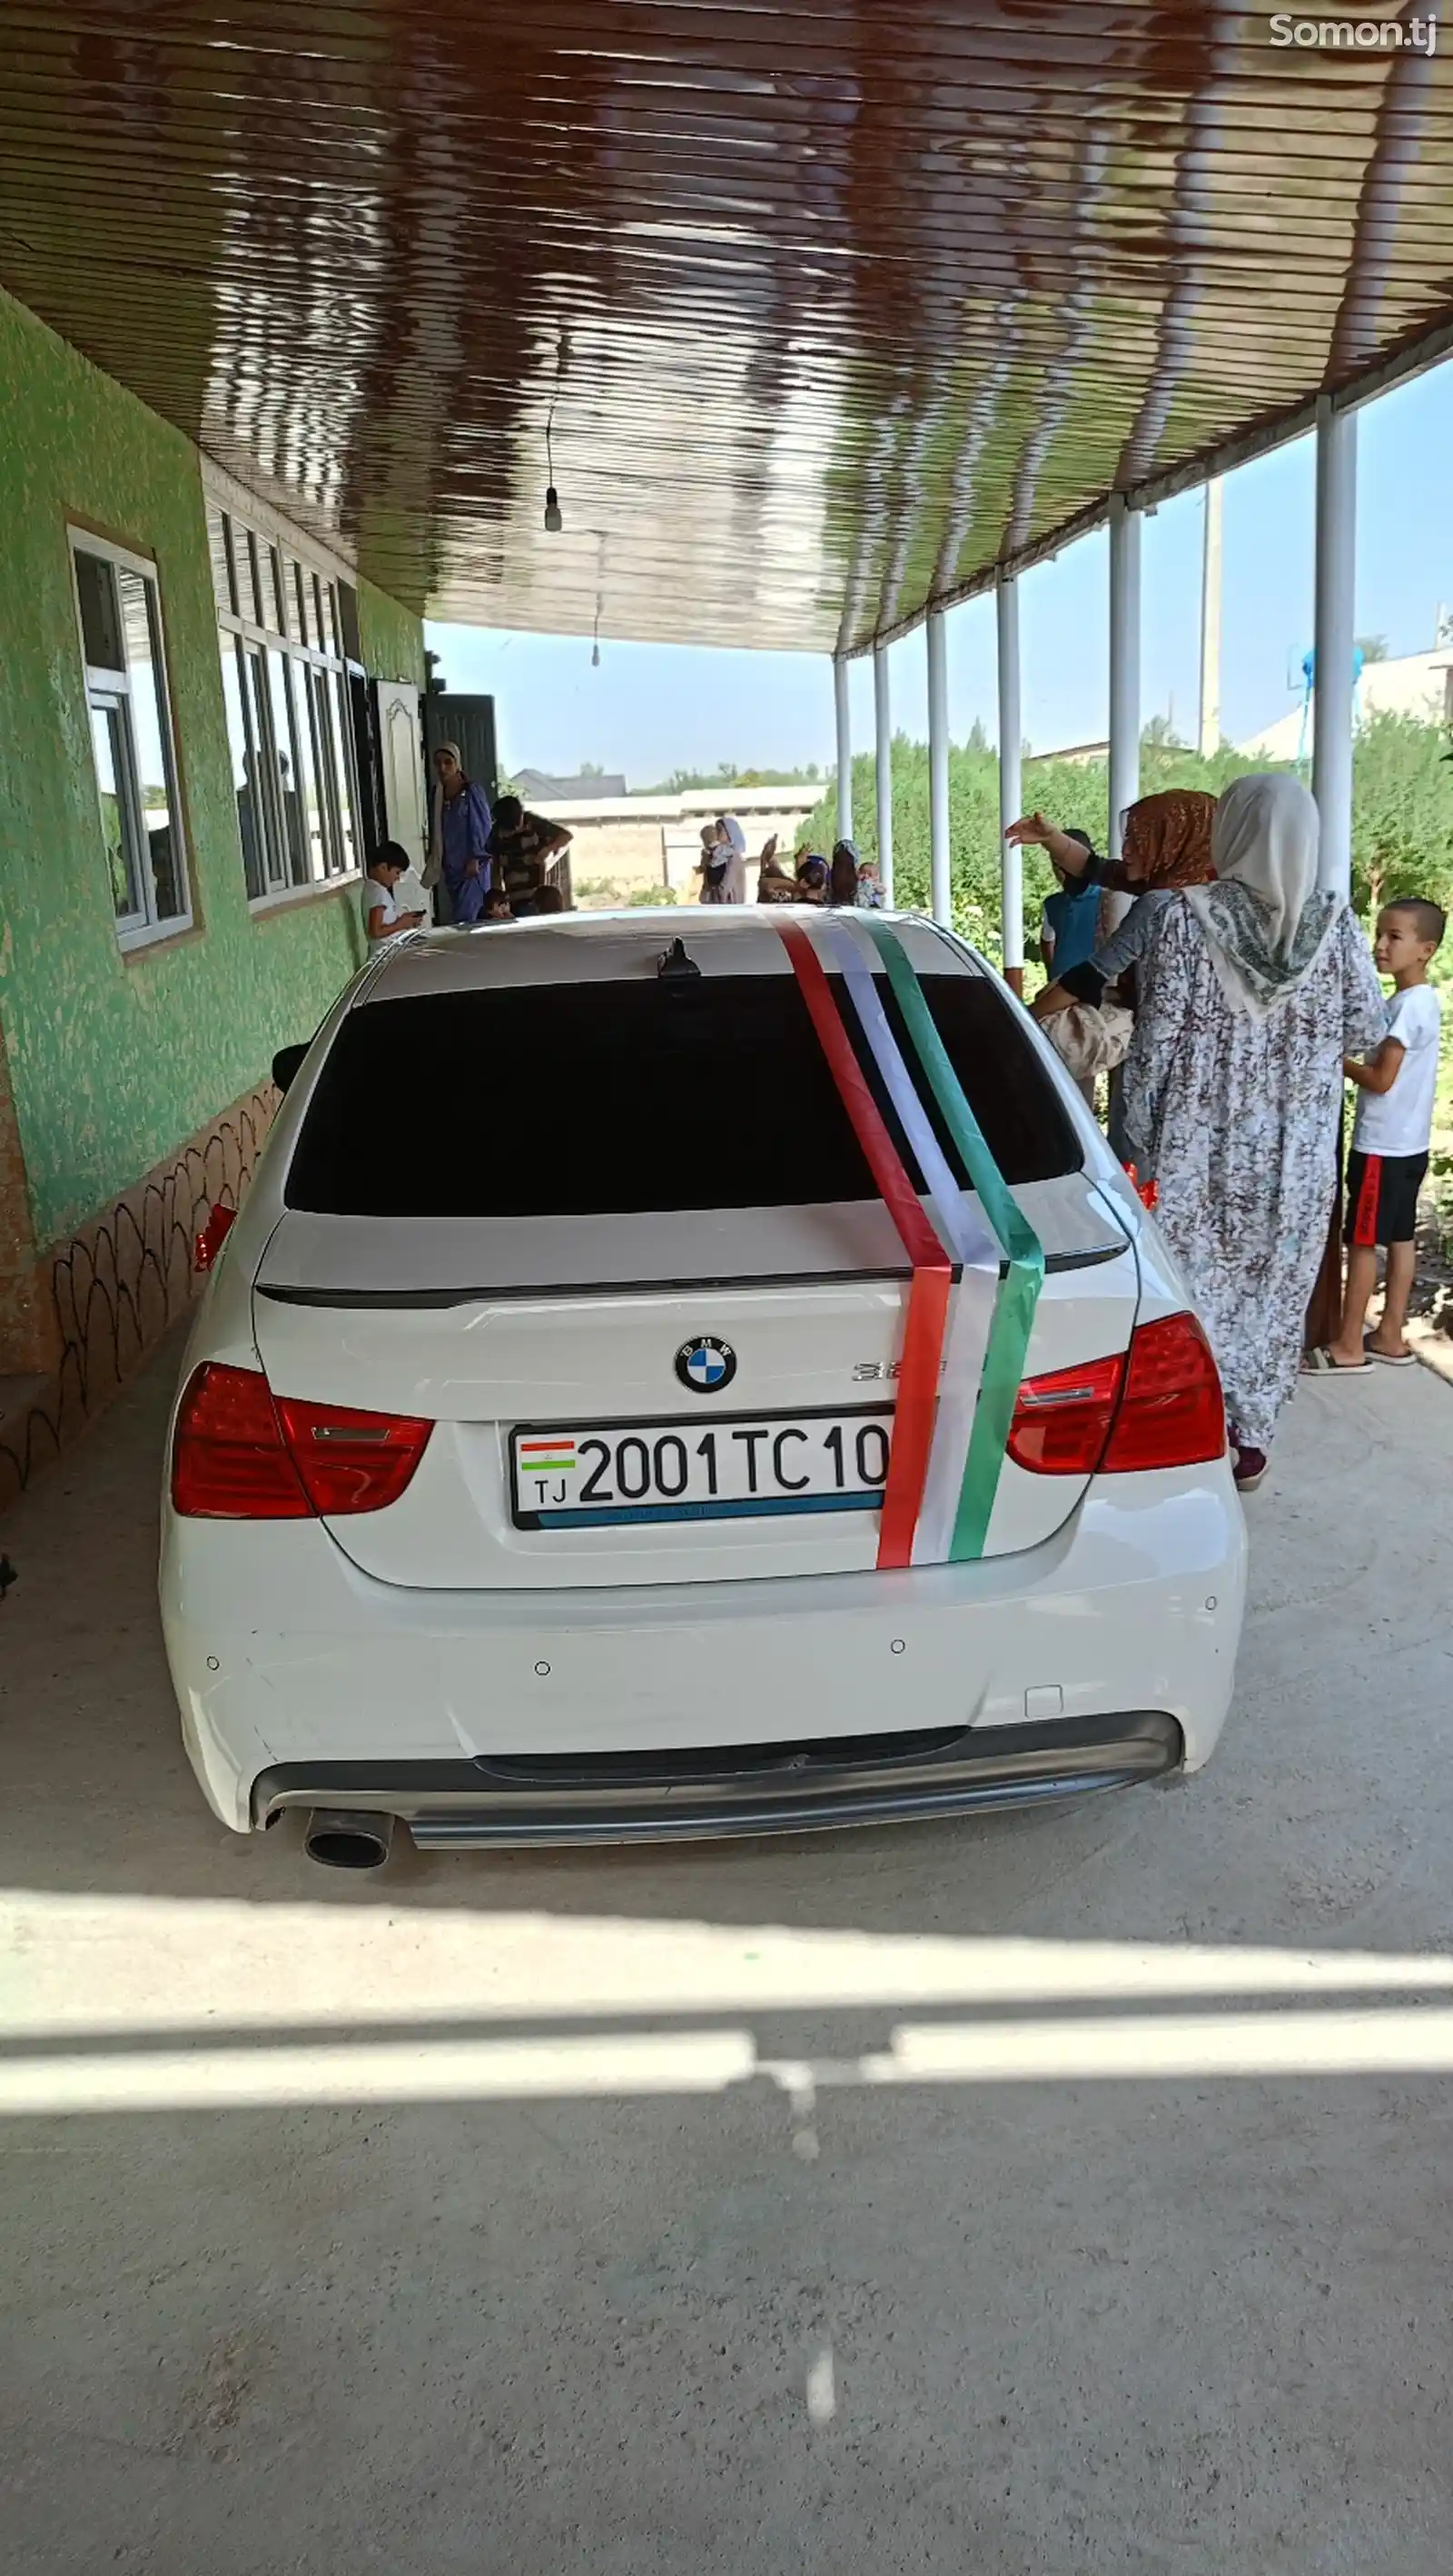 BMW 3 series, 2010-2